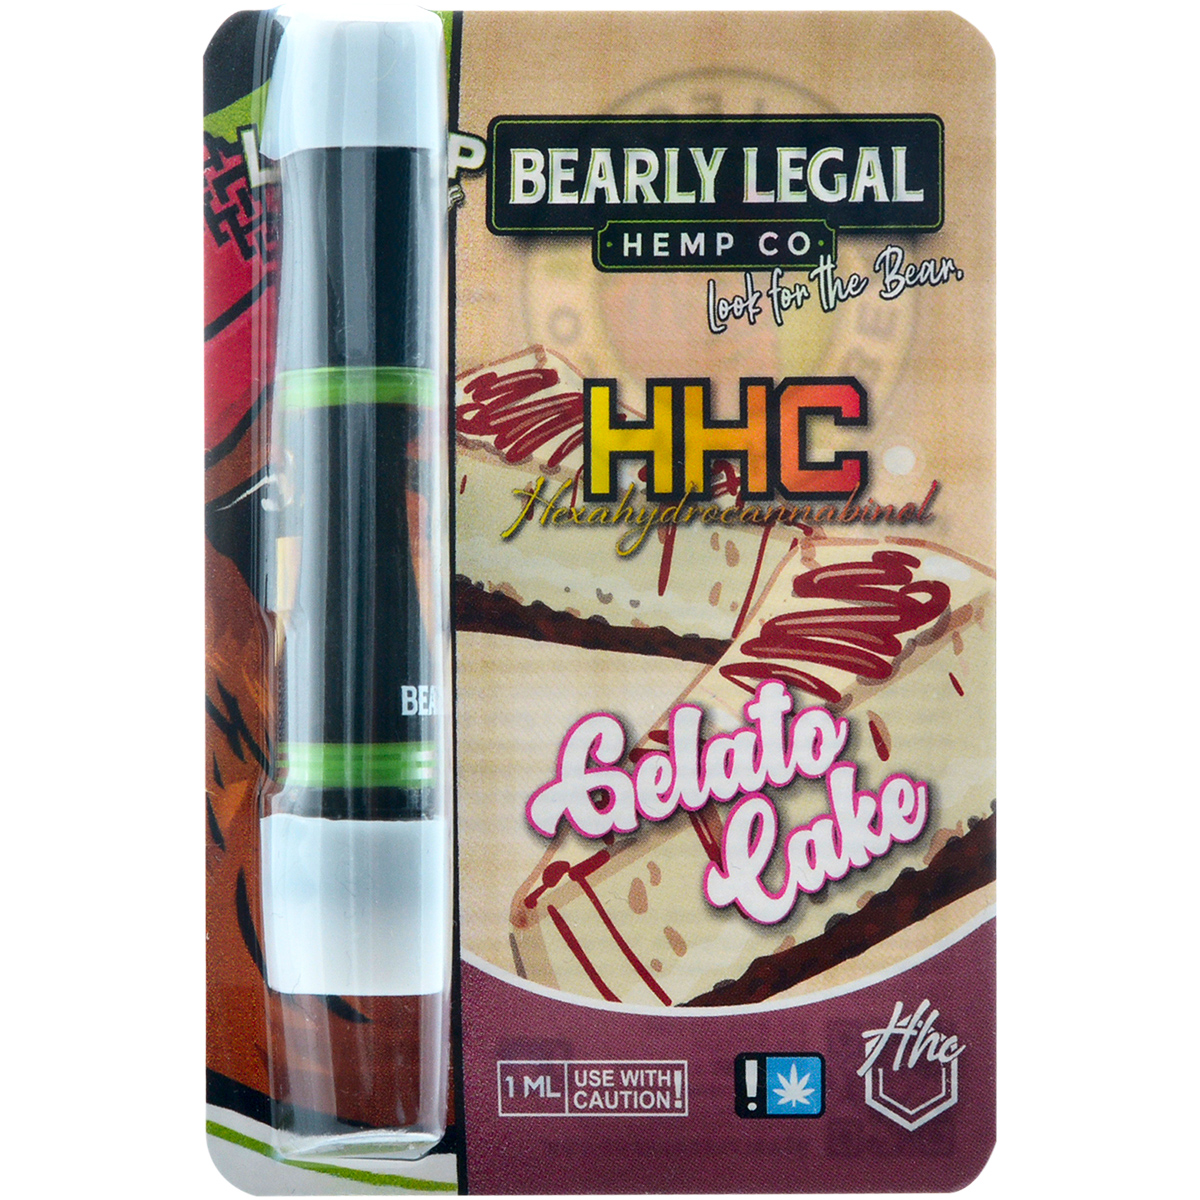 Bearly Legal Hemp HHC Vape Cartridge Gelato Cake 1ml - Dr.Ganja